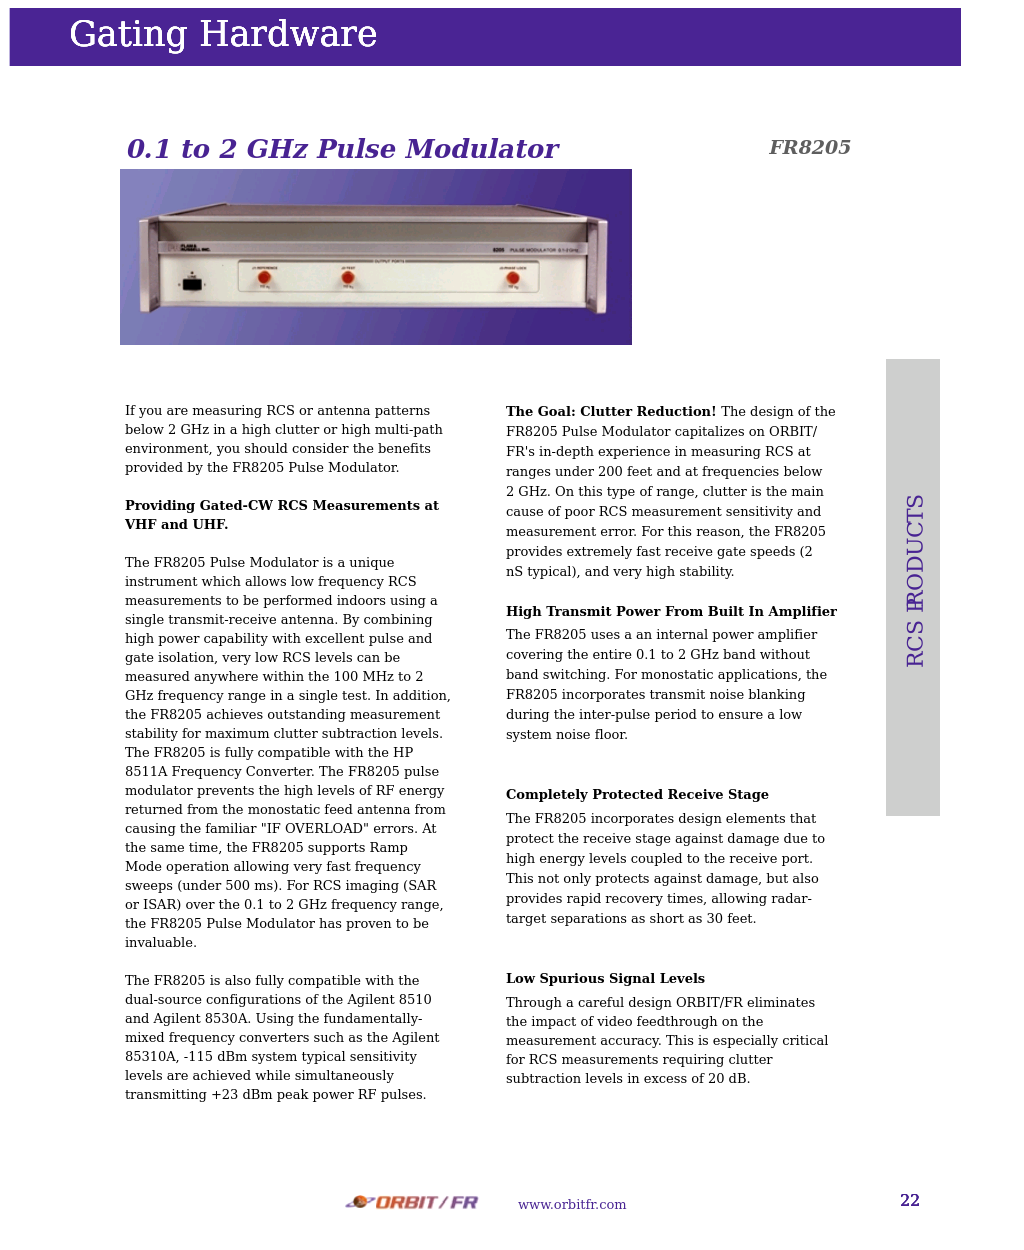 0.1 to 2 GHz Pulse Modulator: FR8205